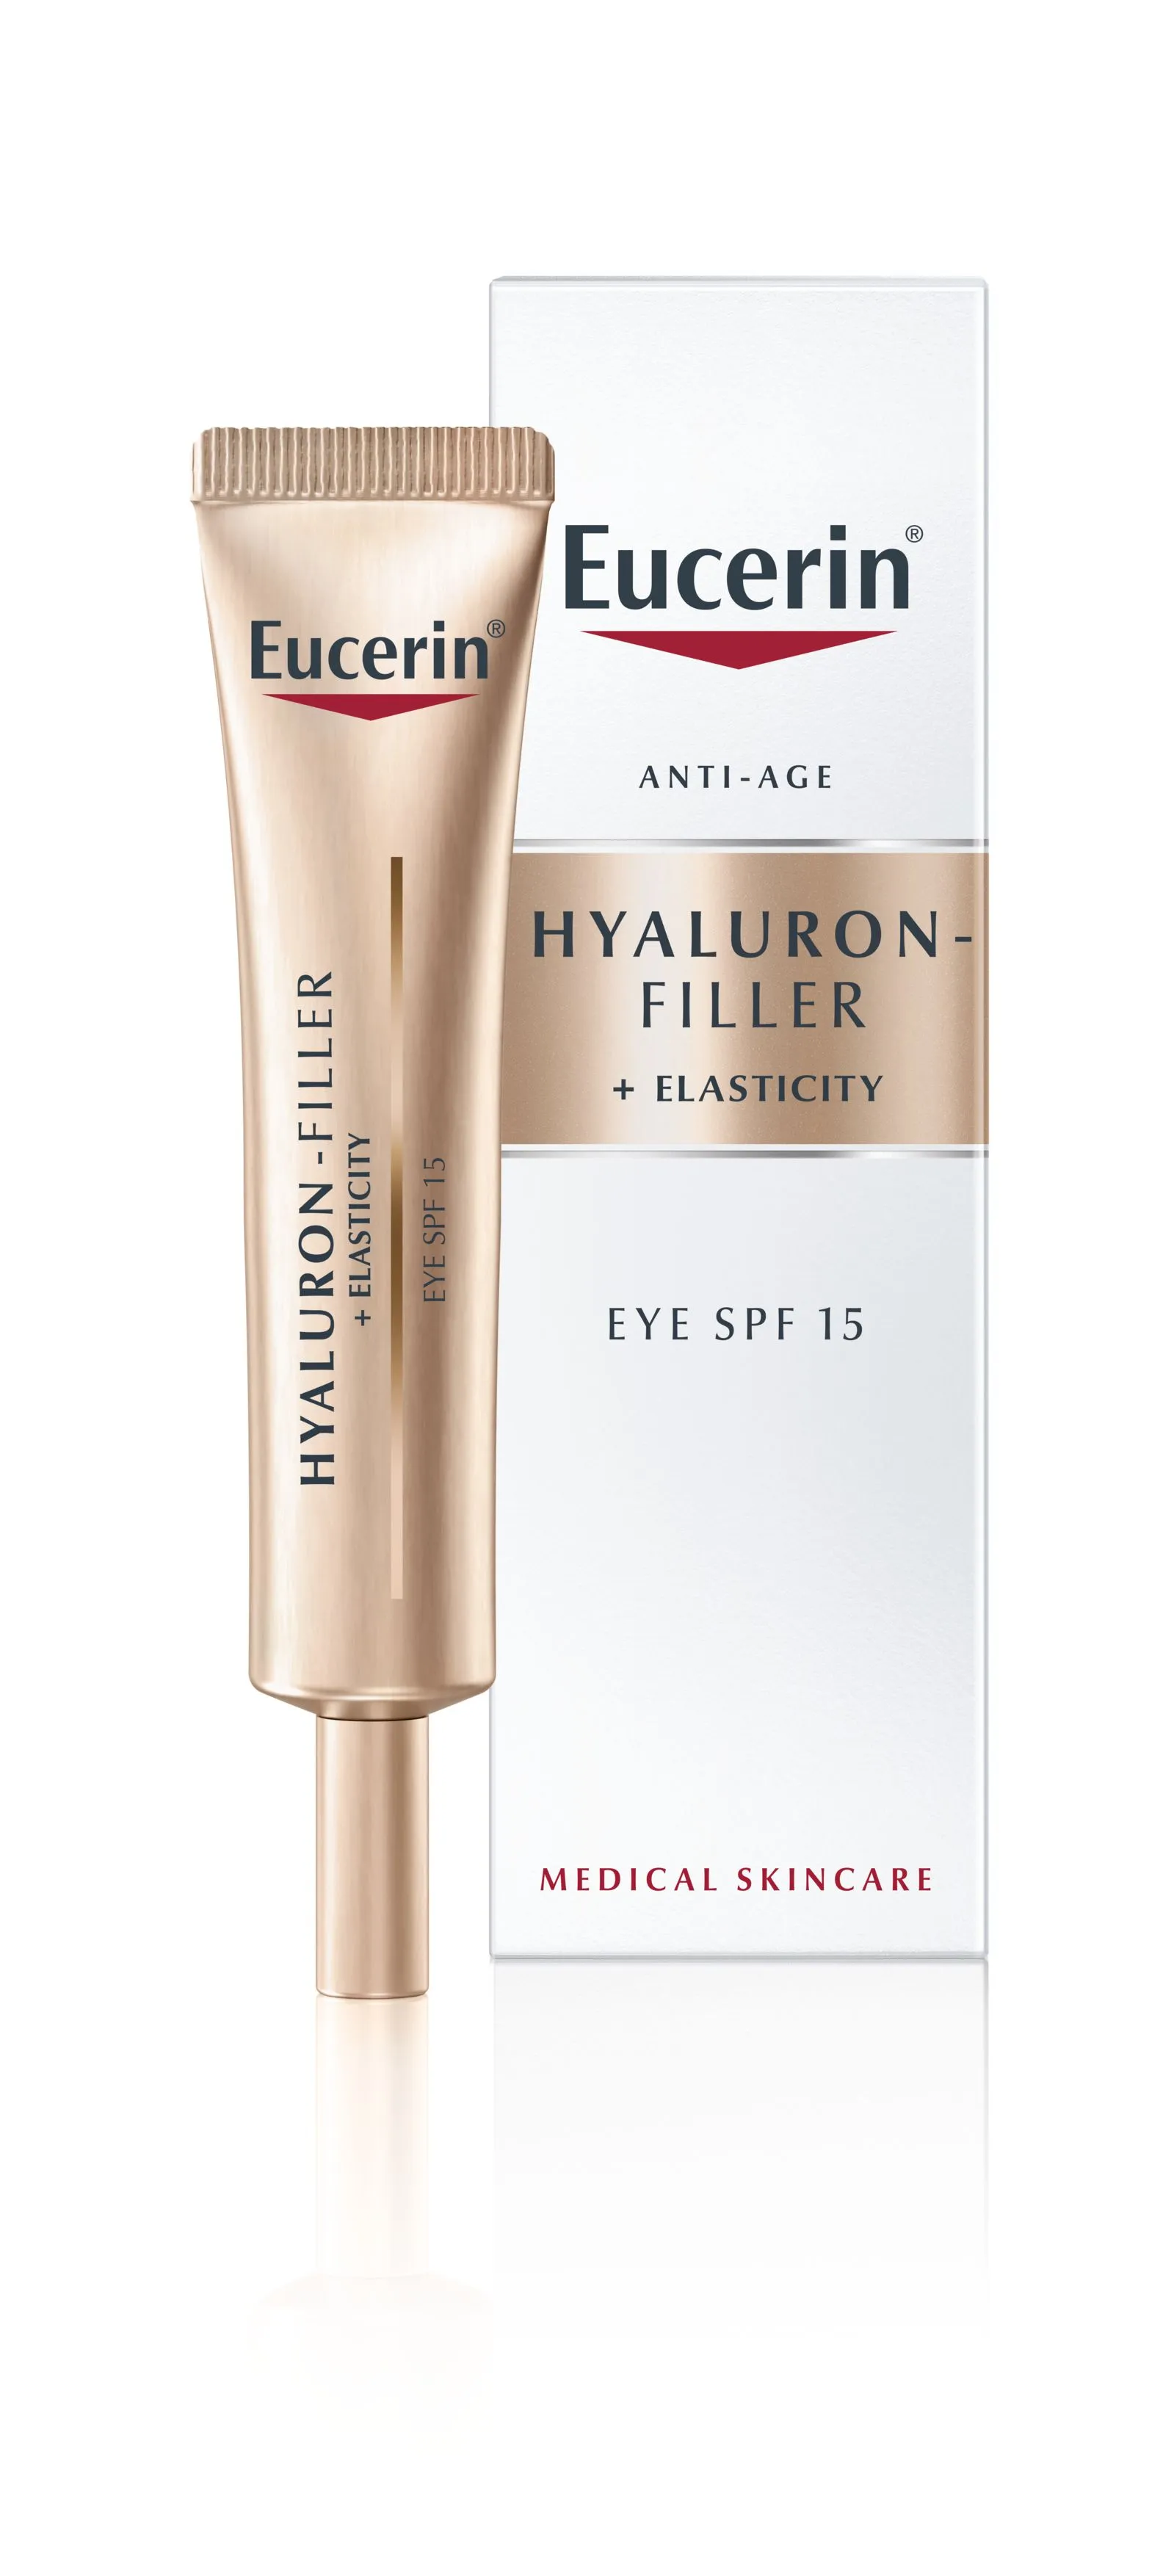 Eucerin Hyaluron-Filler + Elasticity oční krém 15 ml